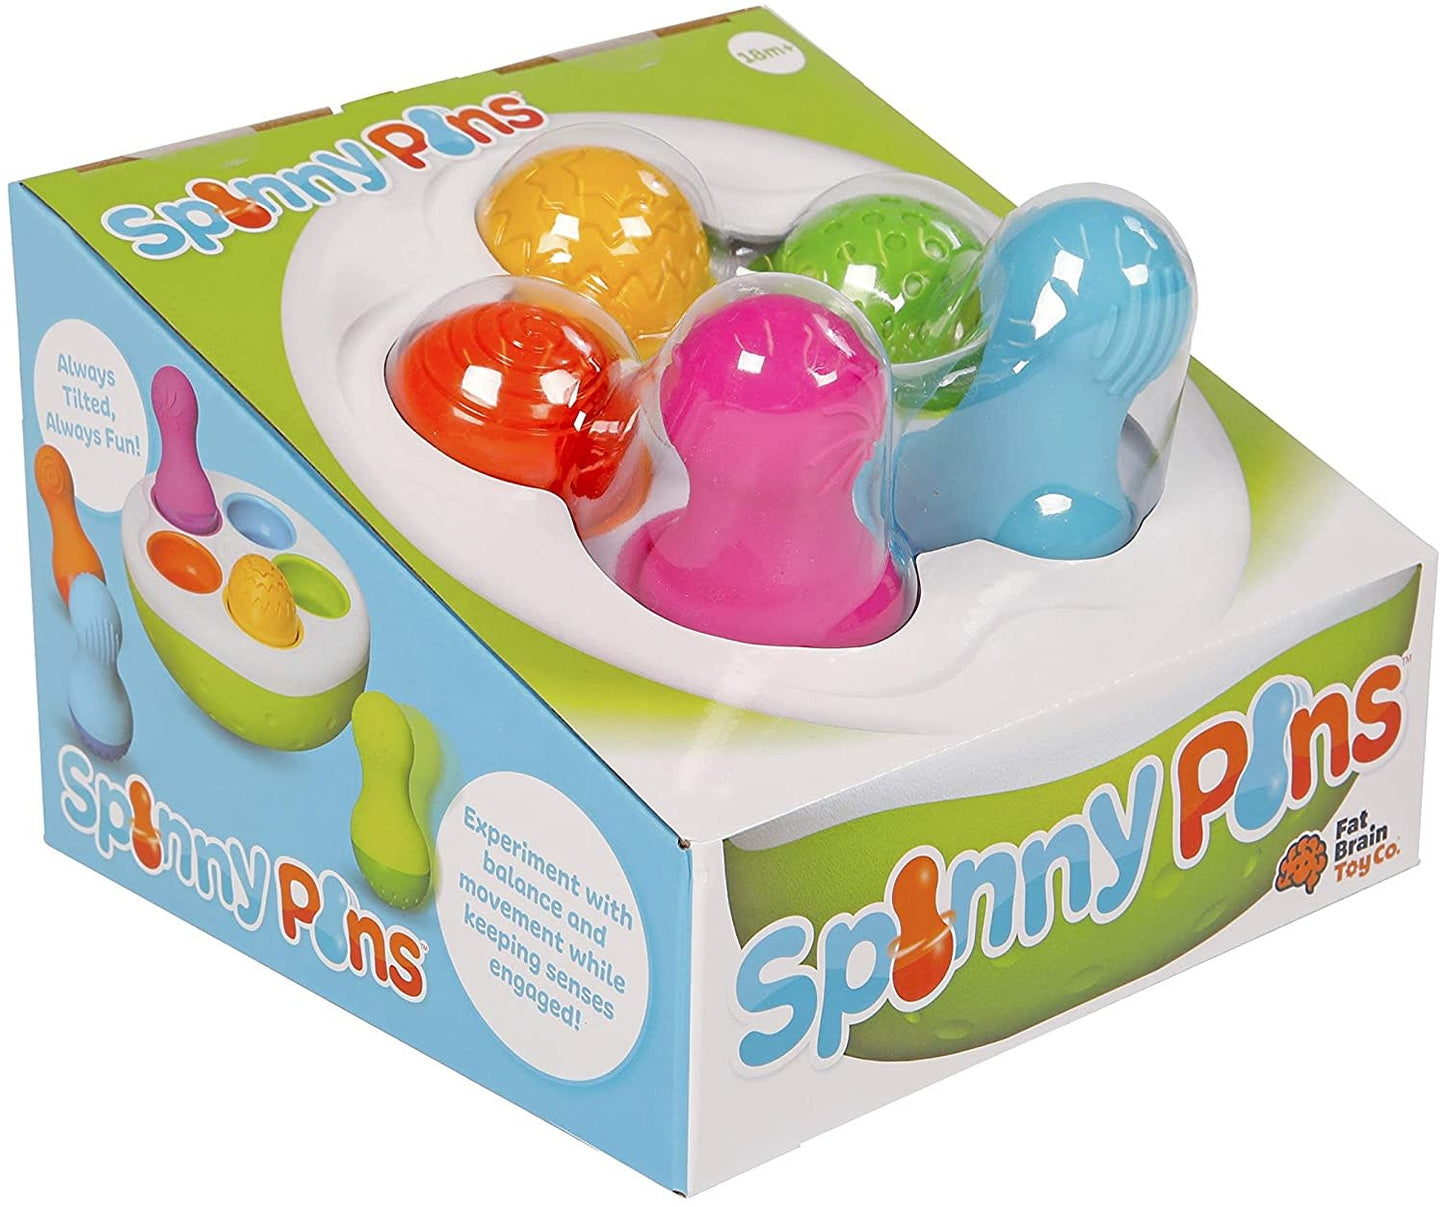 SpinnyPins - Fat Brain Toys